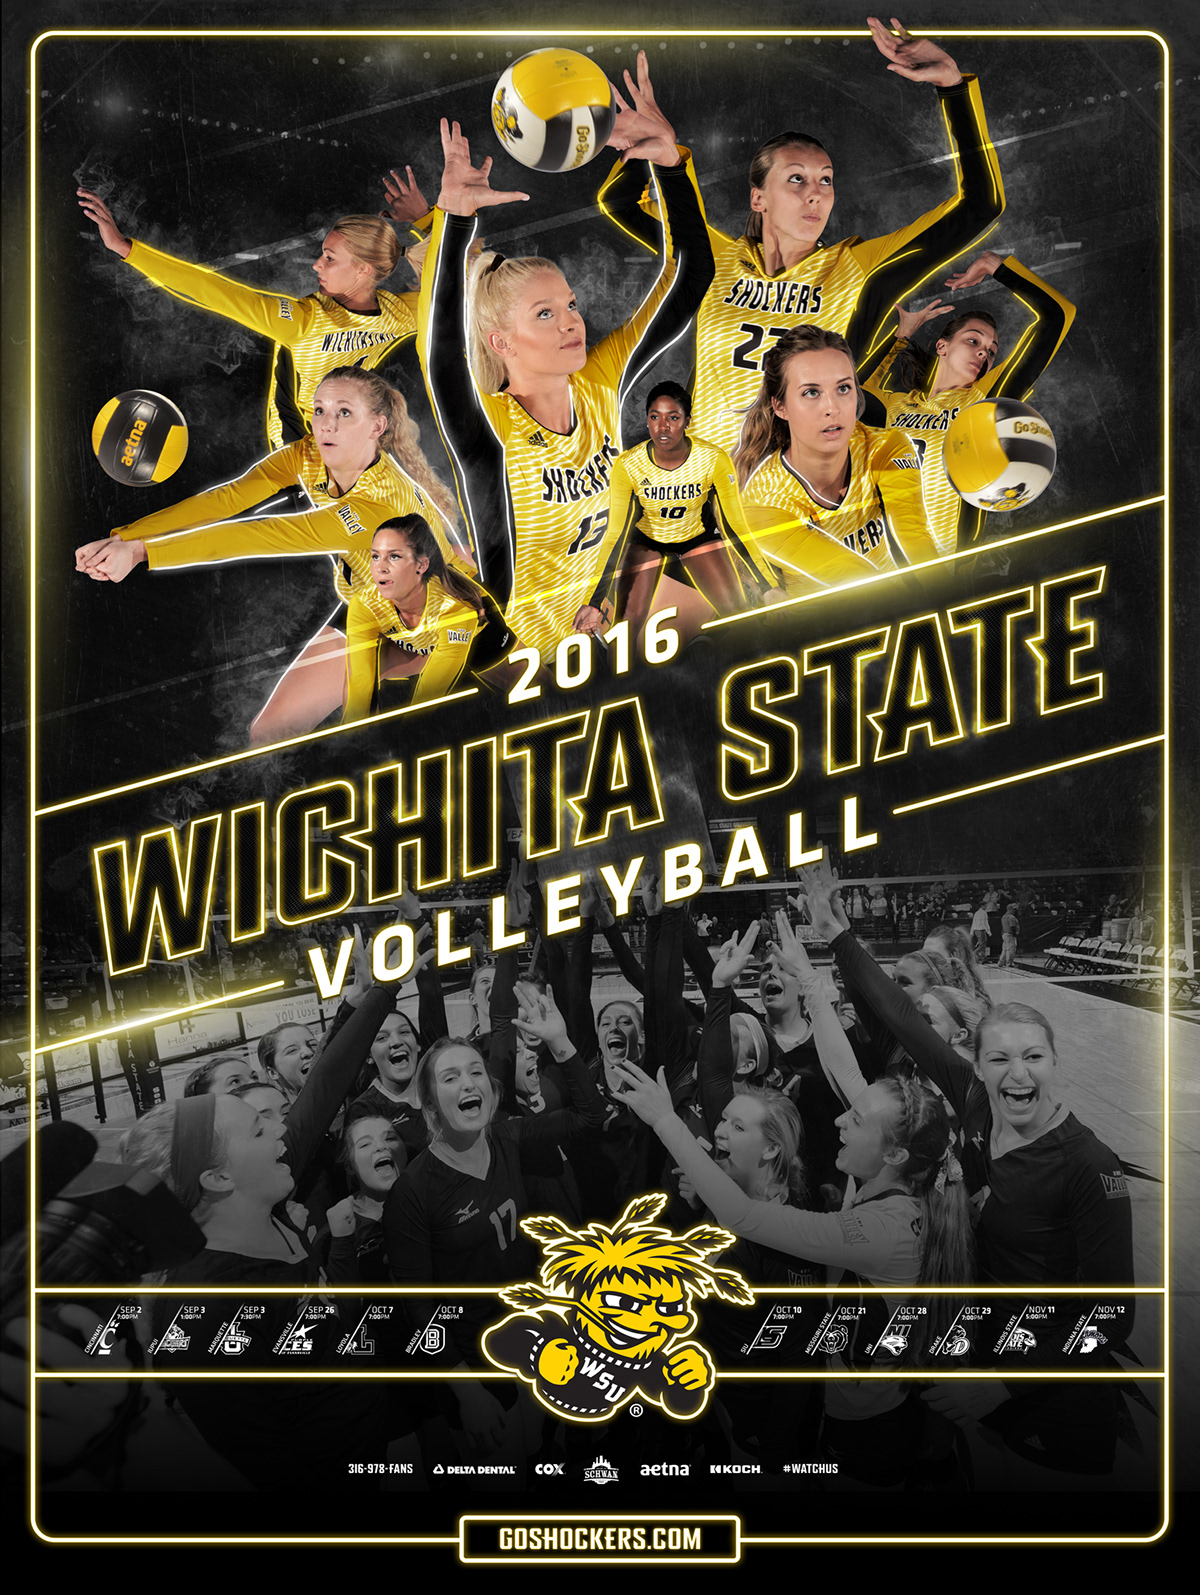 graphic design  sports posters WSU Wichita Wichita State University